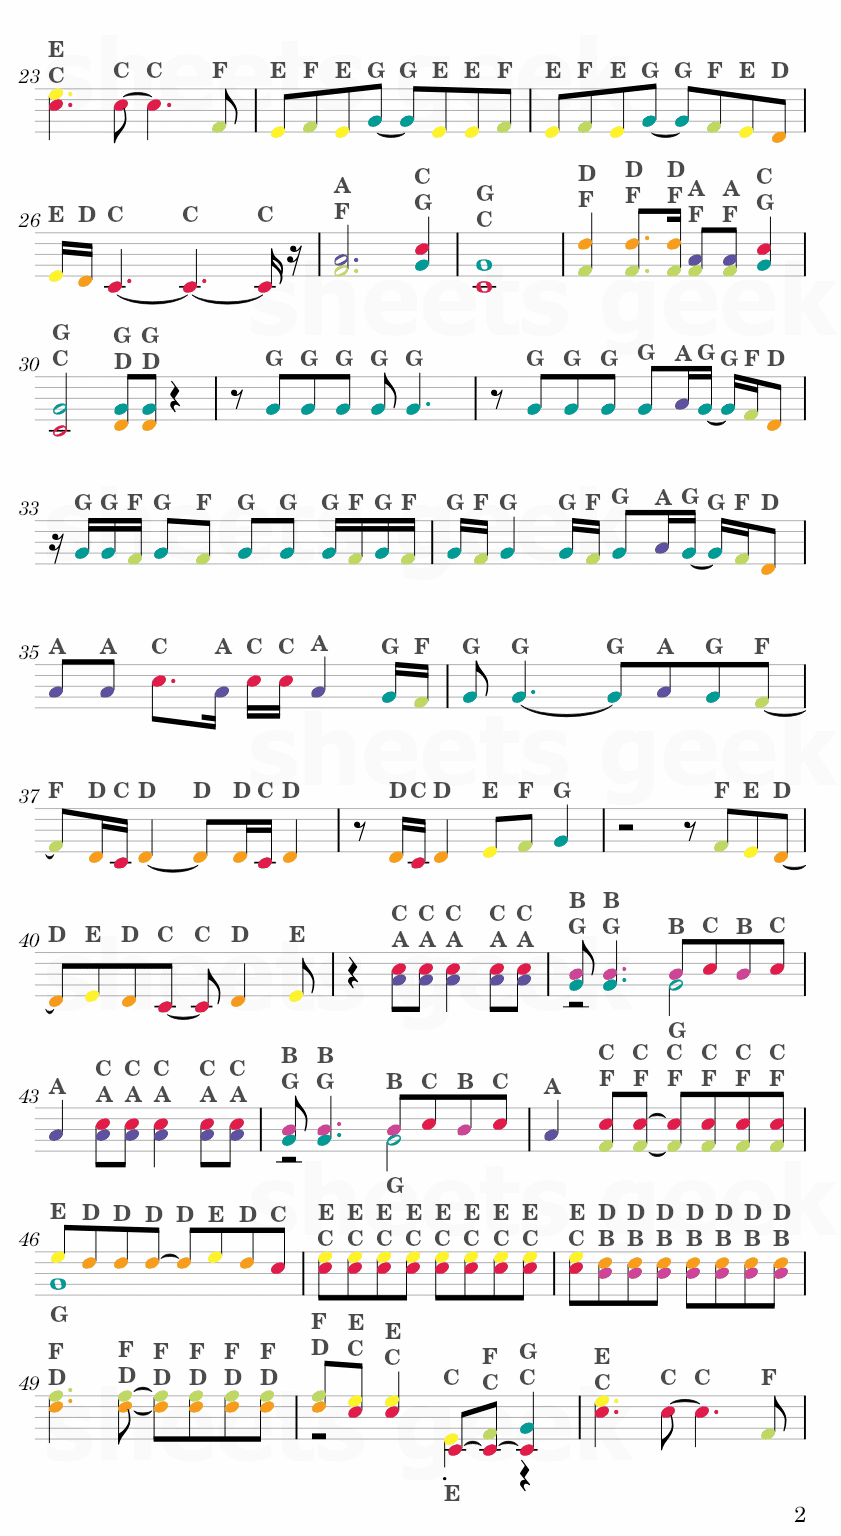 Mobile - Avril Lavigne Easy Sheet Music Free for piano, keyboard, flute, violin, sax, cello page 2